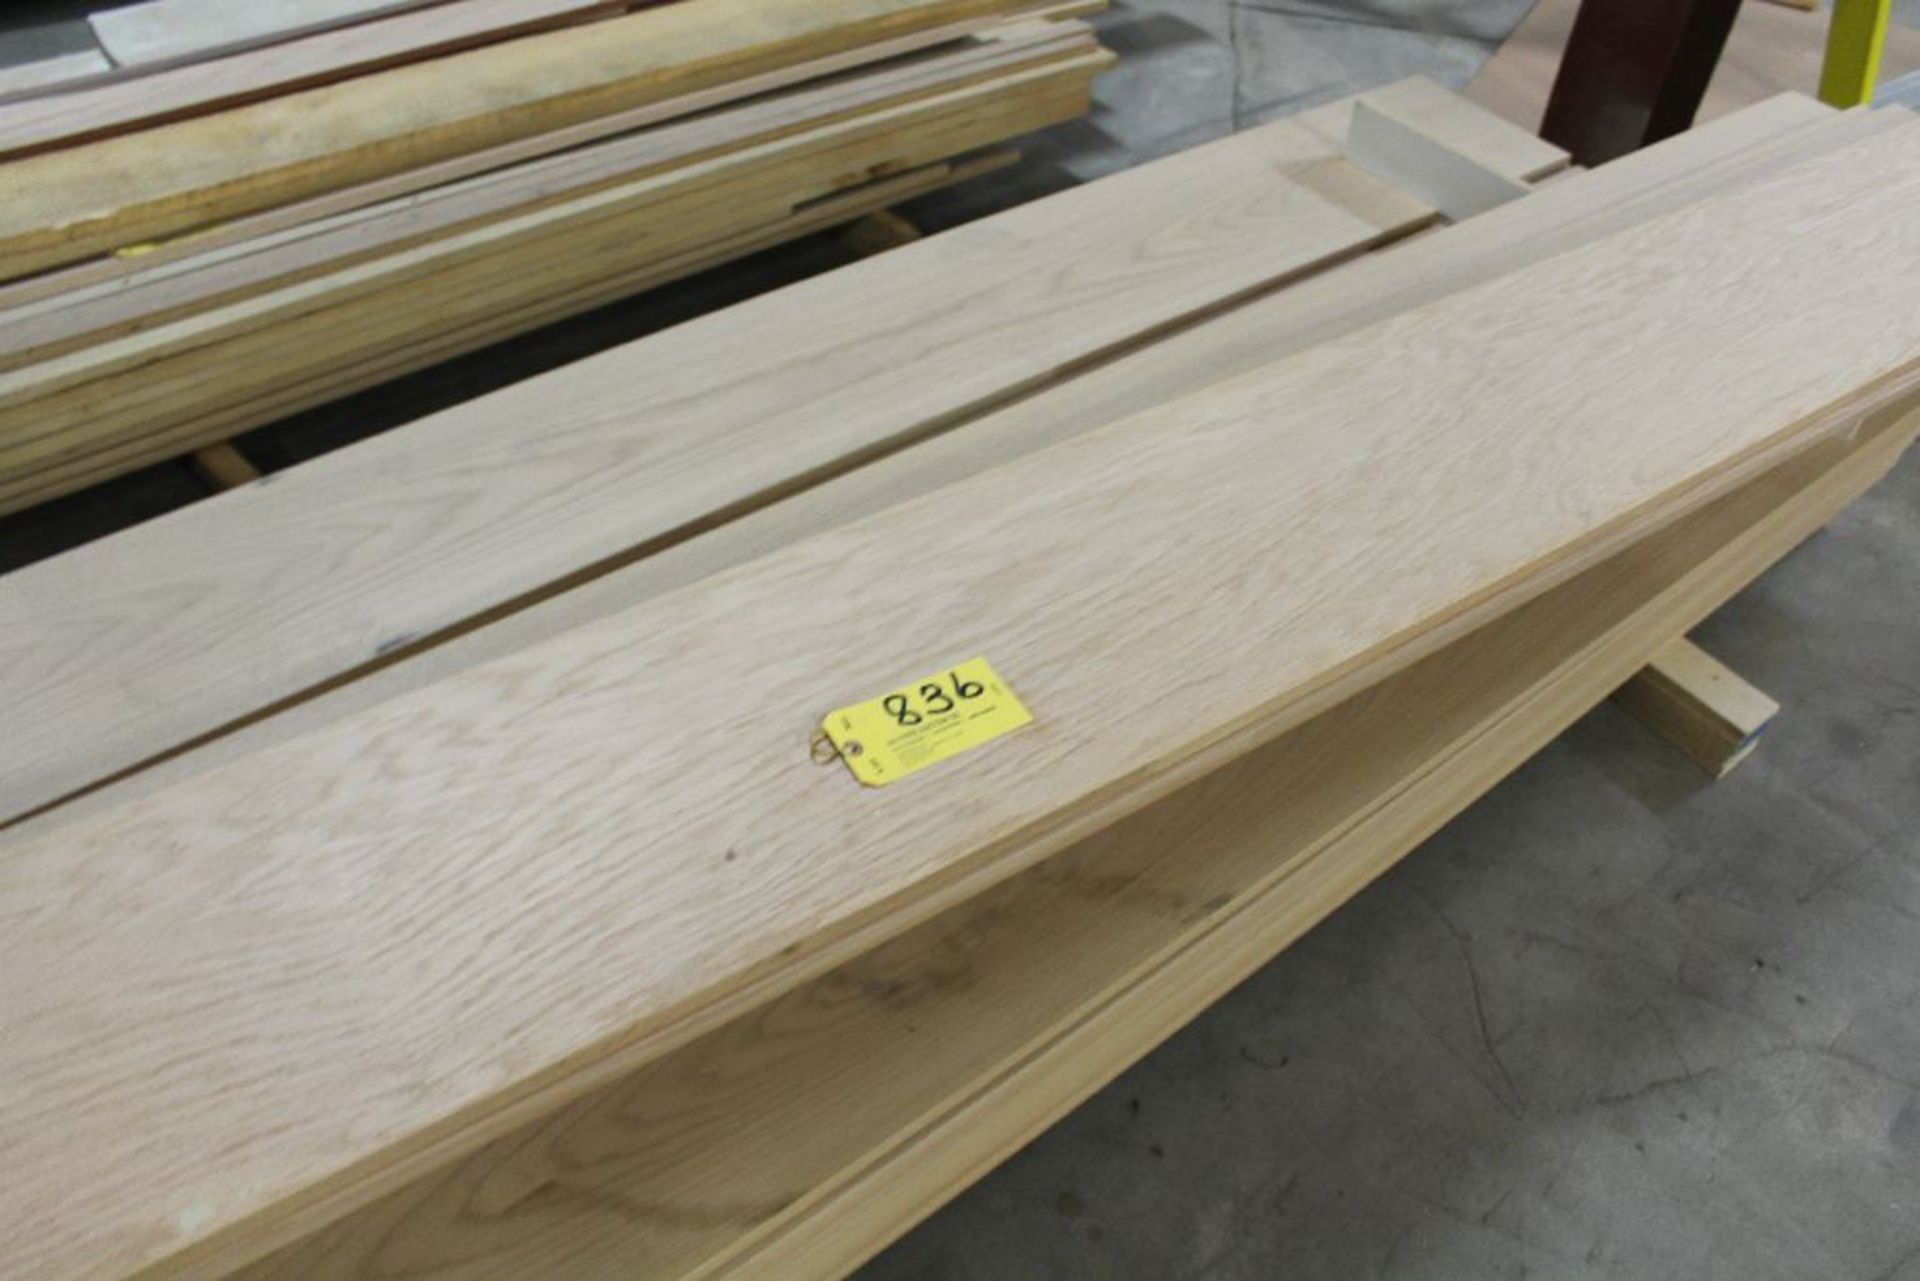 Lumber oak plank, 3/4" x 12" x 16'. - Image 2 of 4